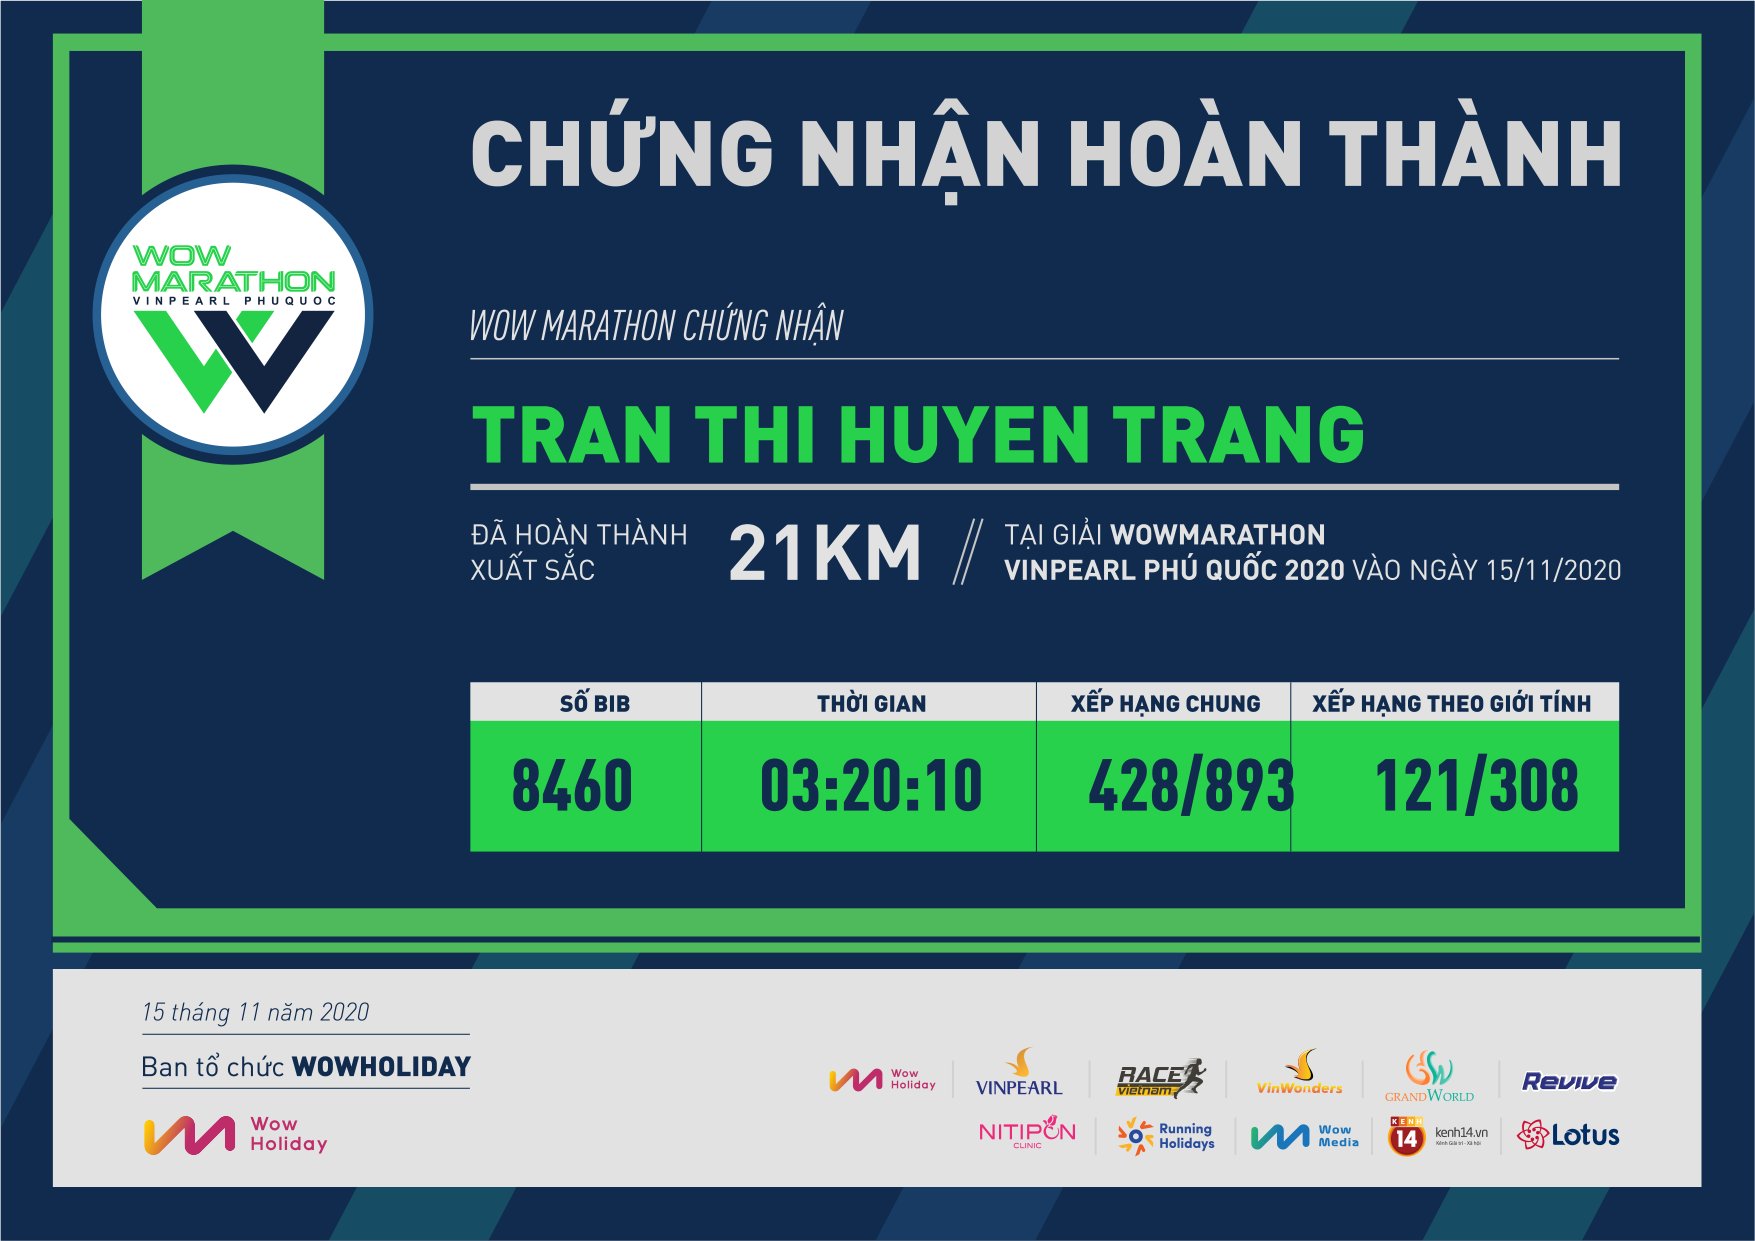 8460 - Tran Thi Huyen Trang